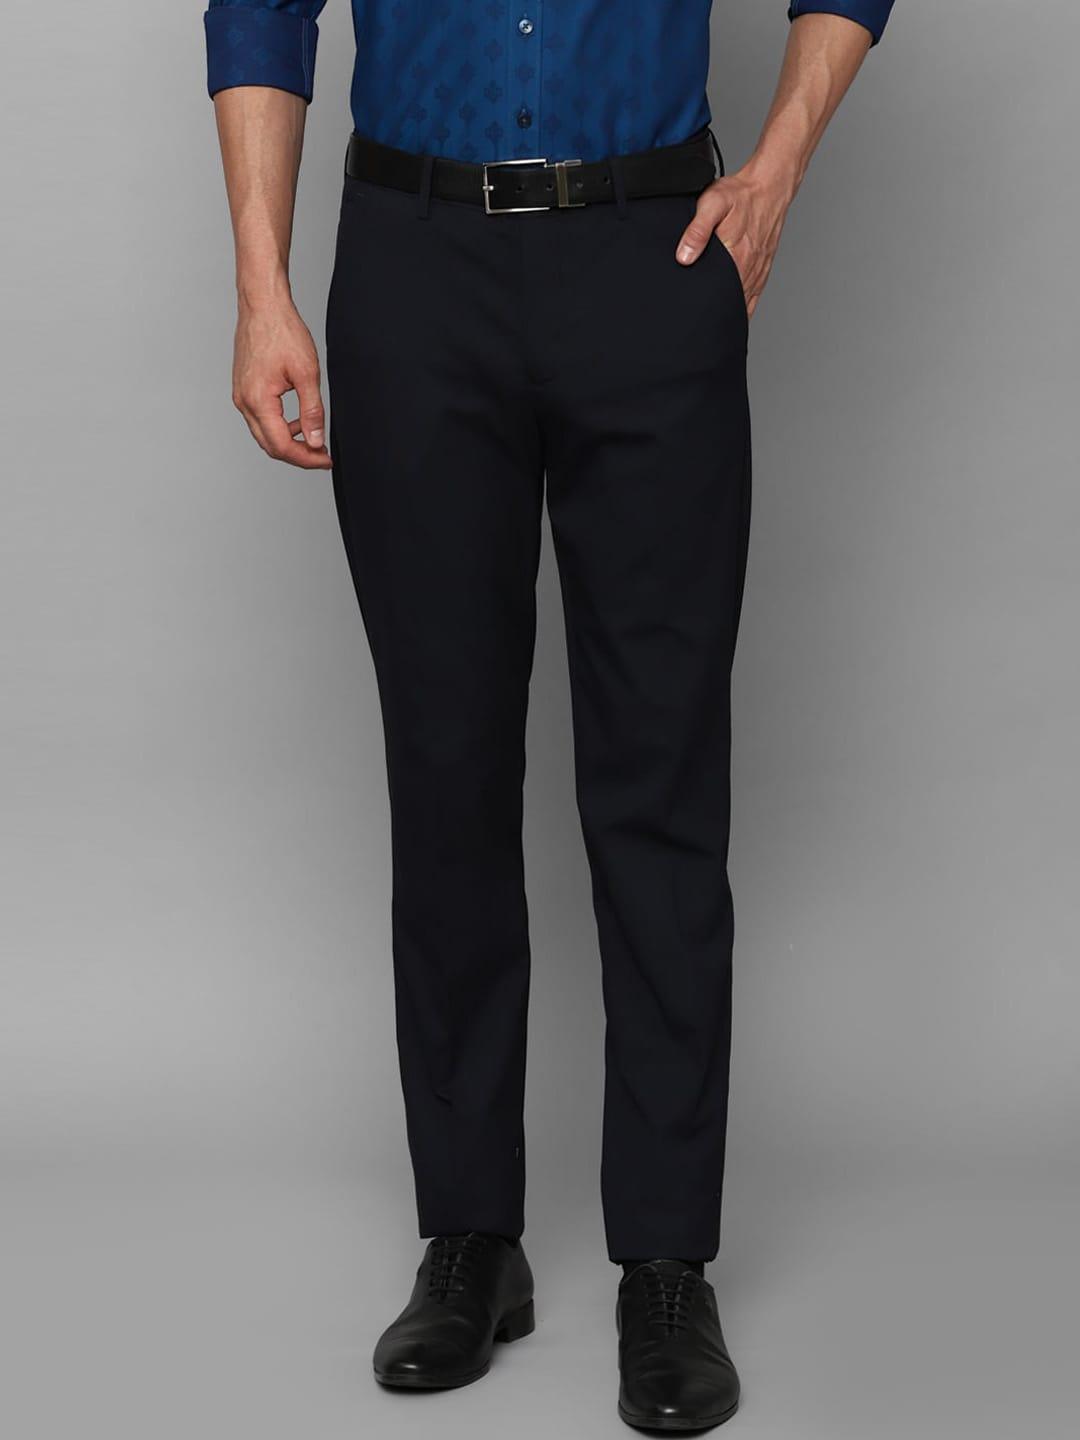 louis-philippe-men-mid-rise-slim-fit-formal-trousers